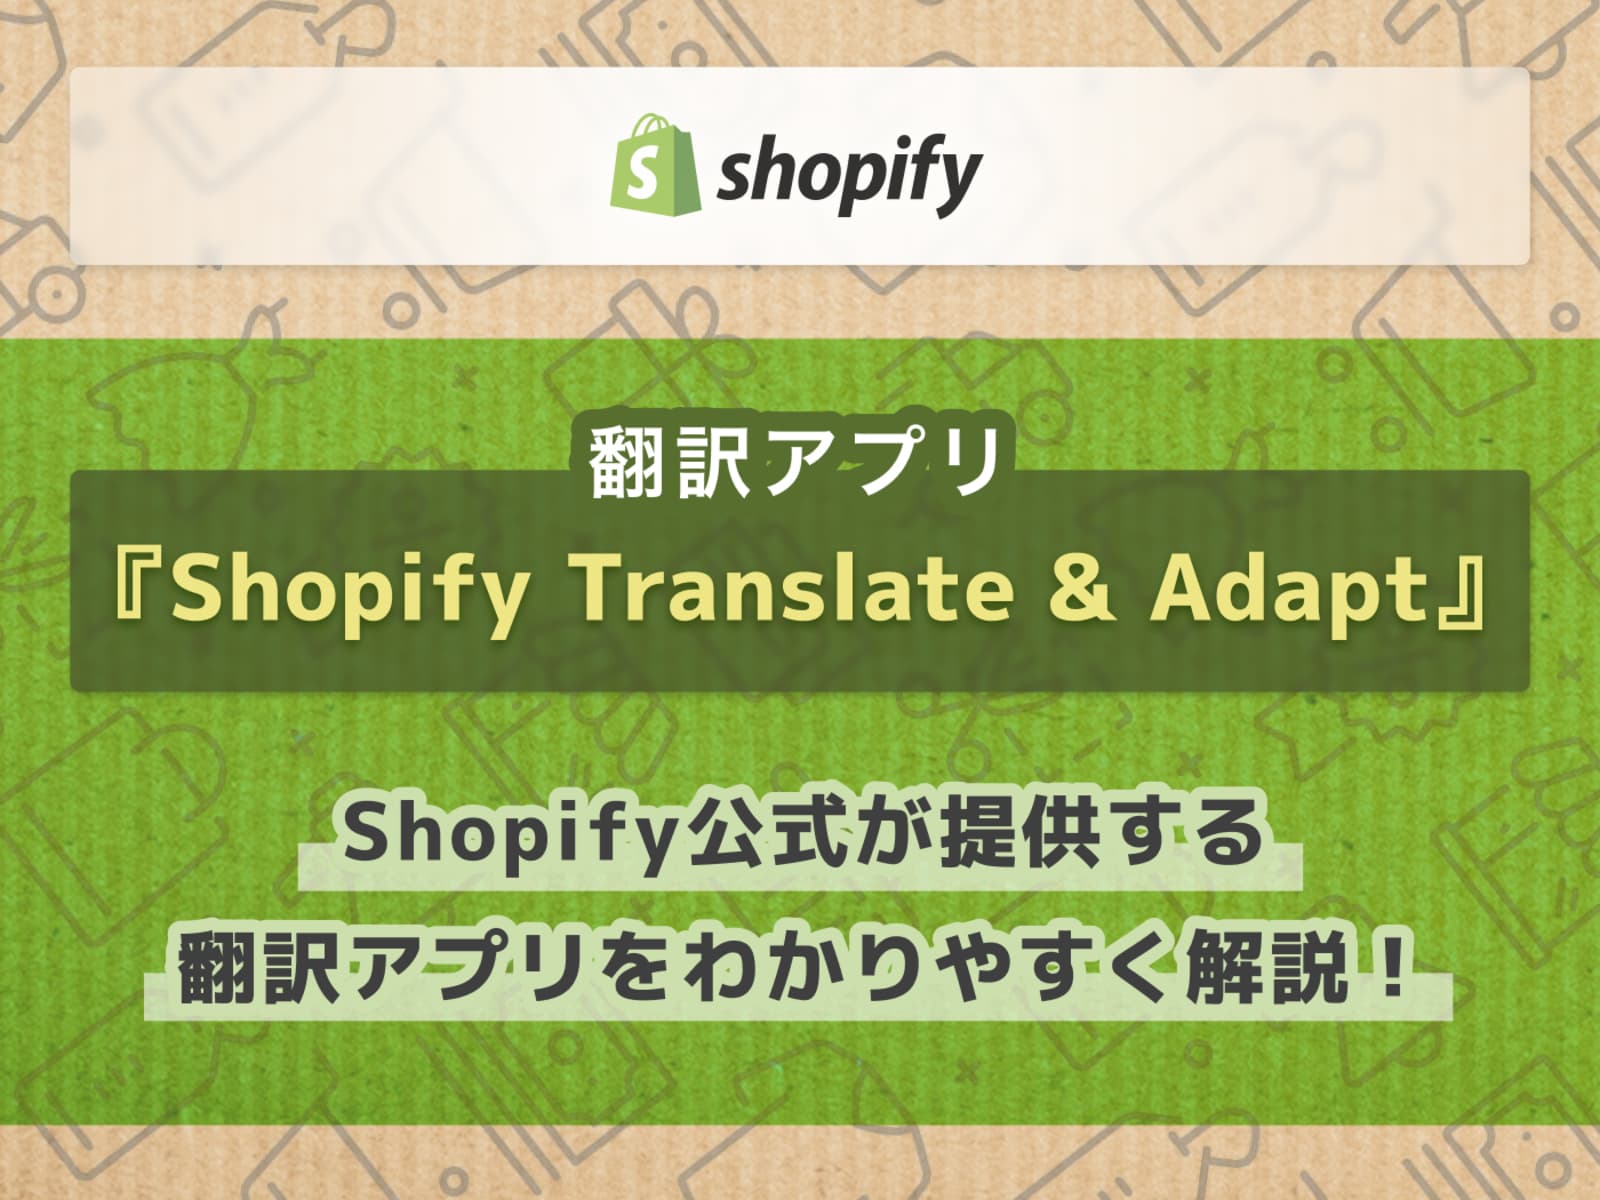 Shopify公式 無料翻訳アプリ『Shopify Translate & Adapt』の使い方を分かりやすく解説。